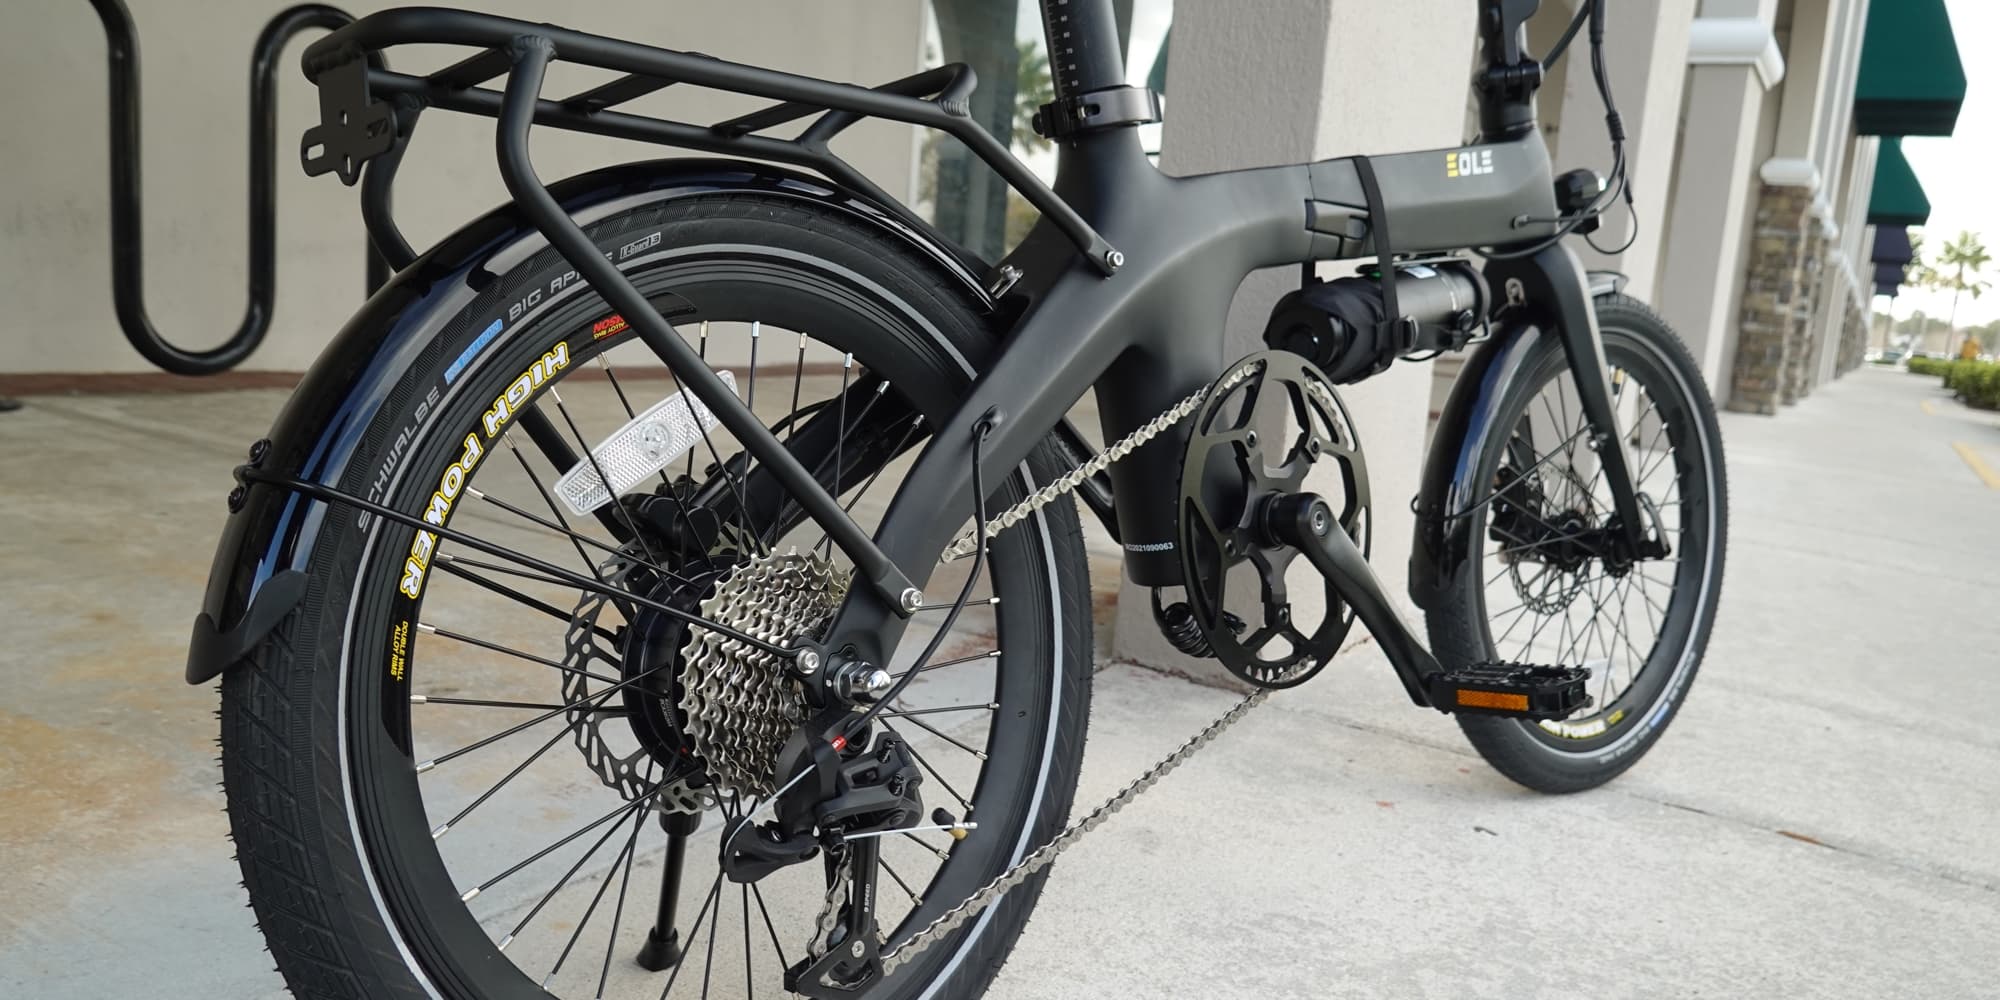 Morfuns Eole S carbon fiber folding e-bike review Throttle and torque sensor!